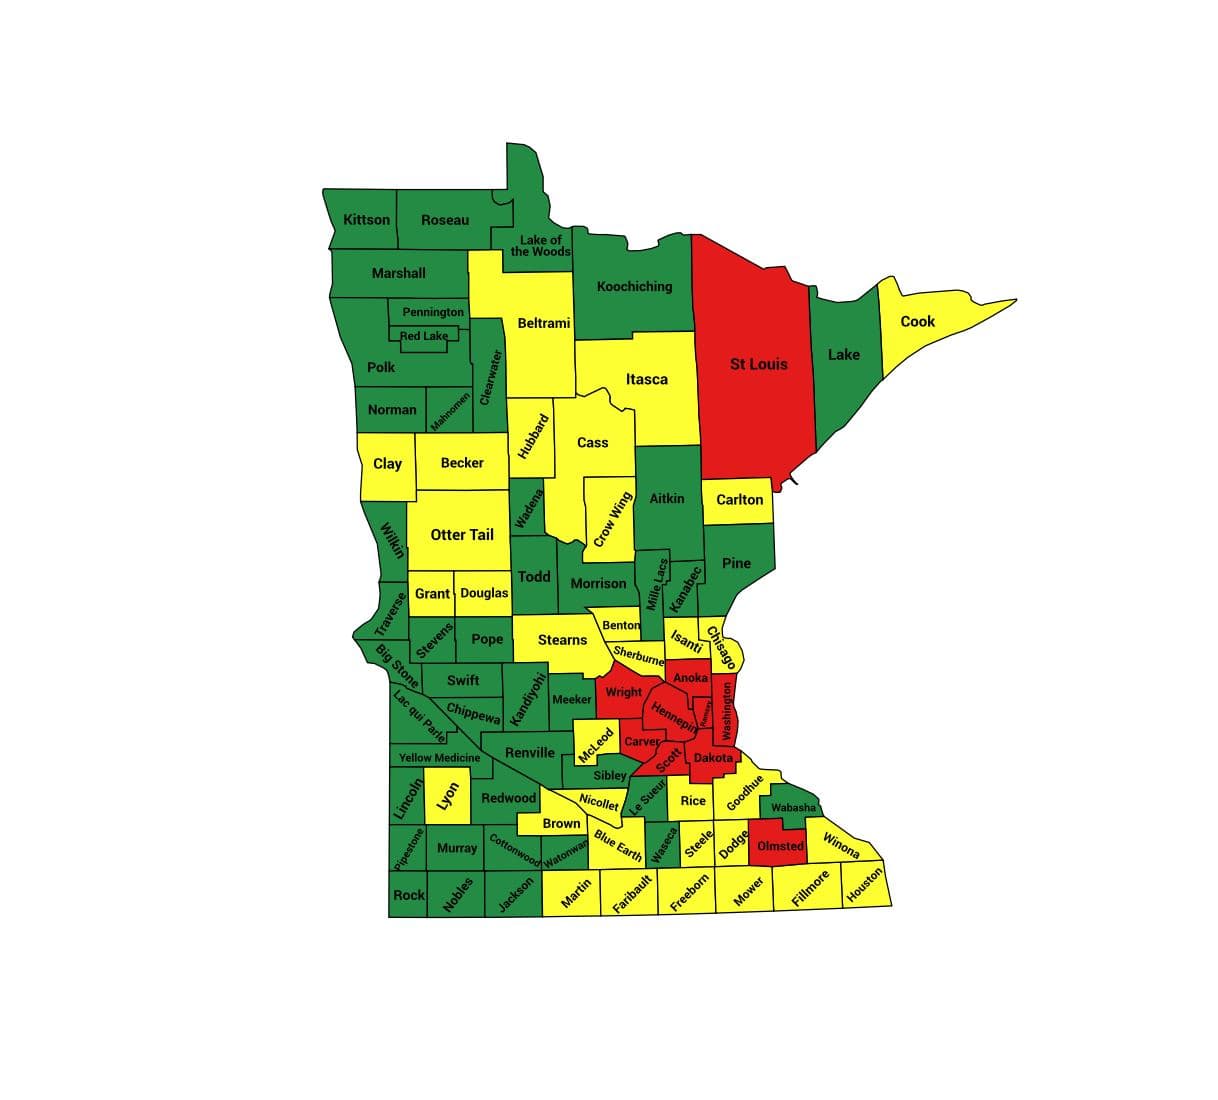 Seth Keshel County Trend Map for Minnesota